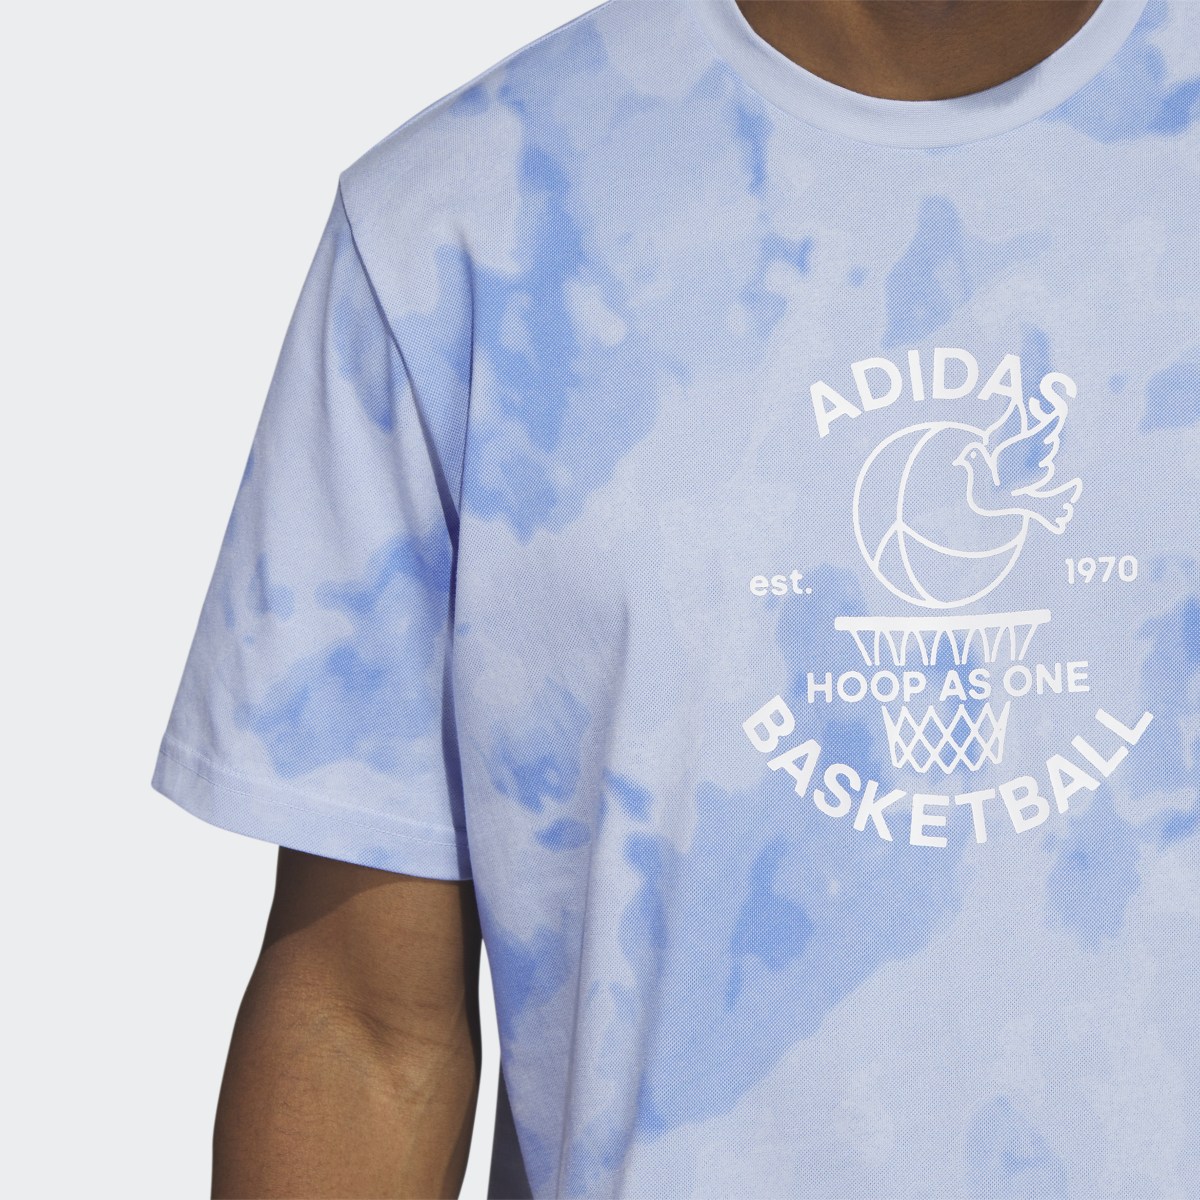 Adidas T-shirt Worldwide Hoops Basketball Graphic. 6